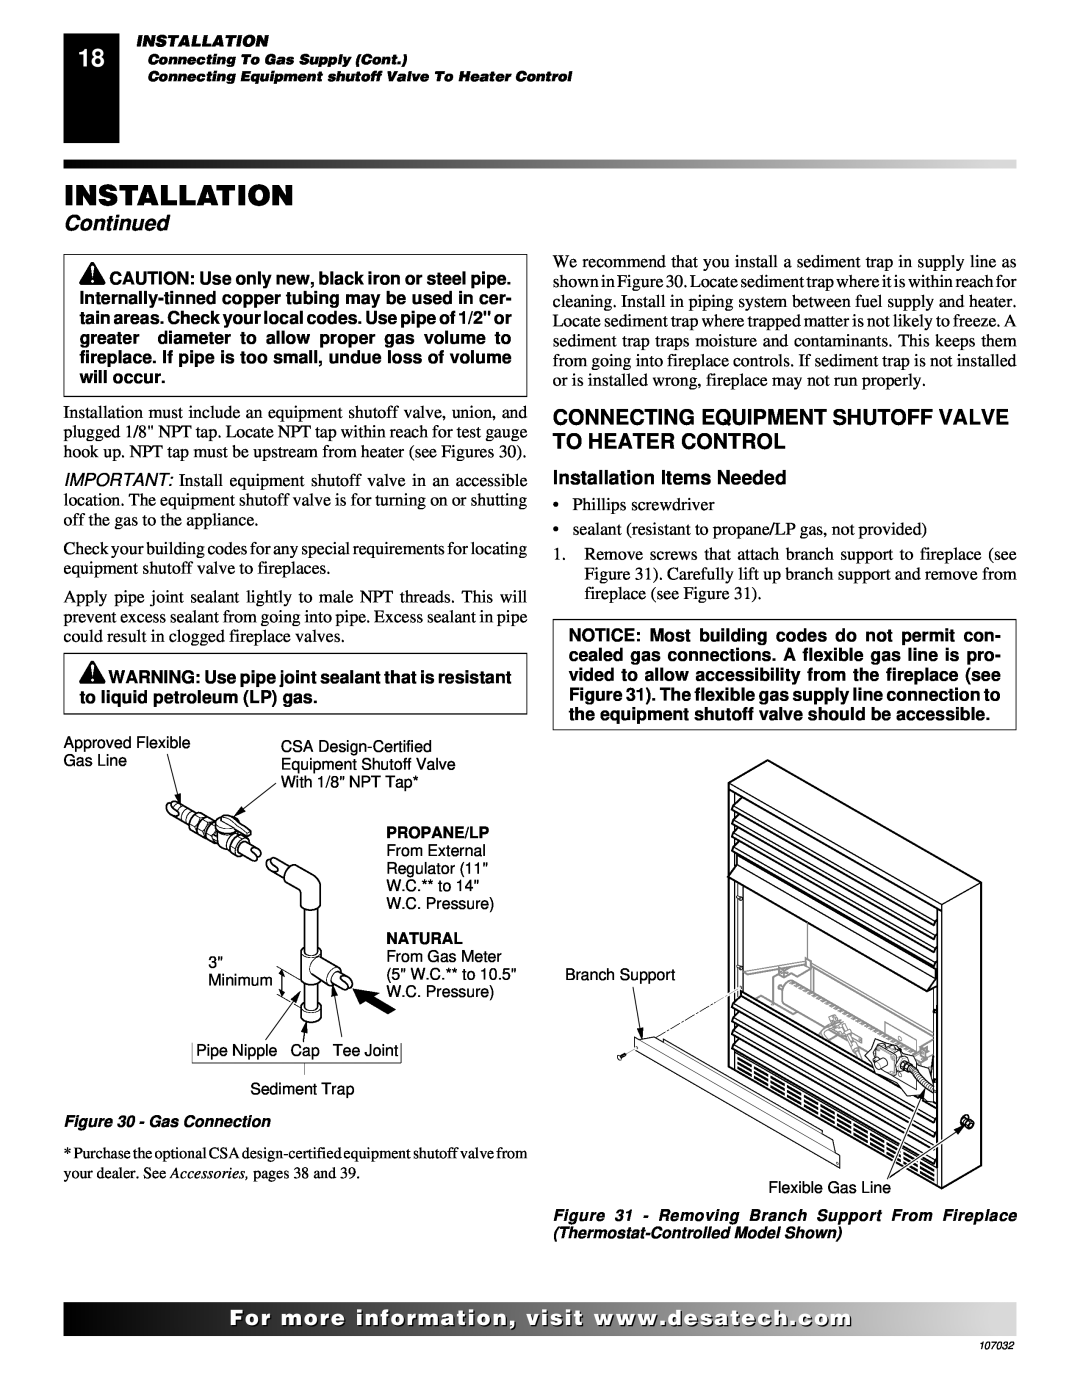 Desa VMH10TPB installation manual Installation Items Needed, Continued 